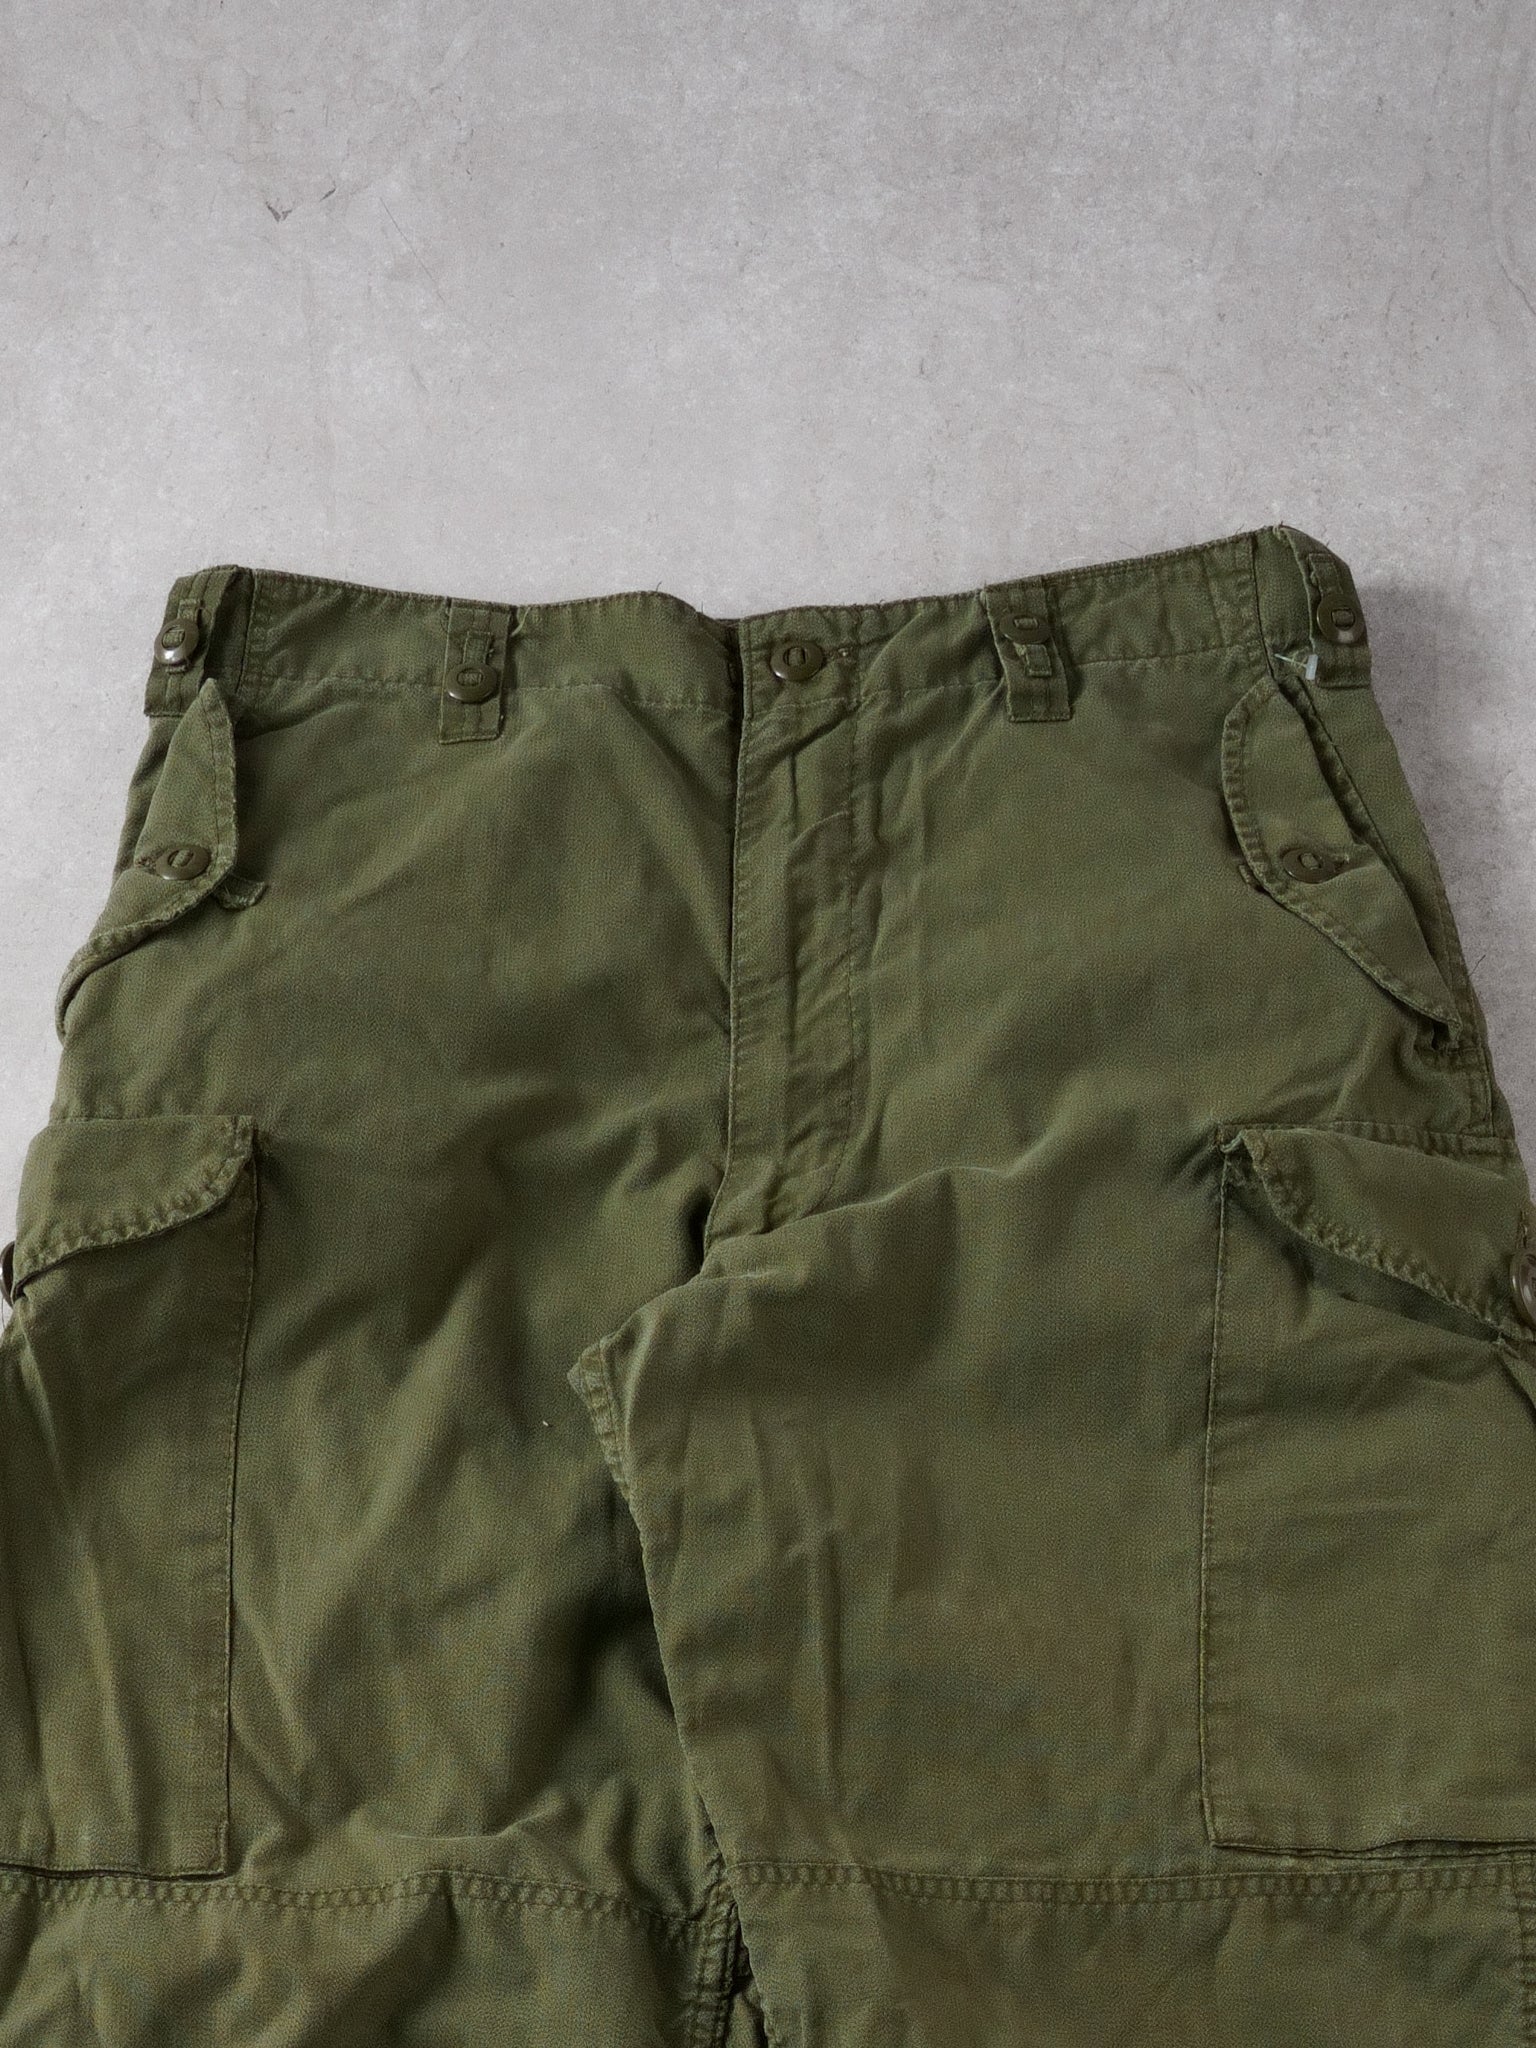 Vintage 98' Army Green Military Parachute Pants (32x30)